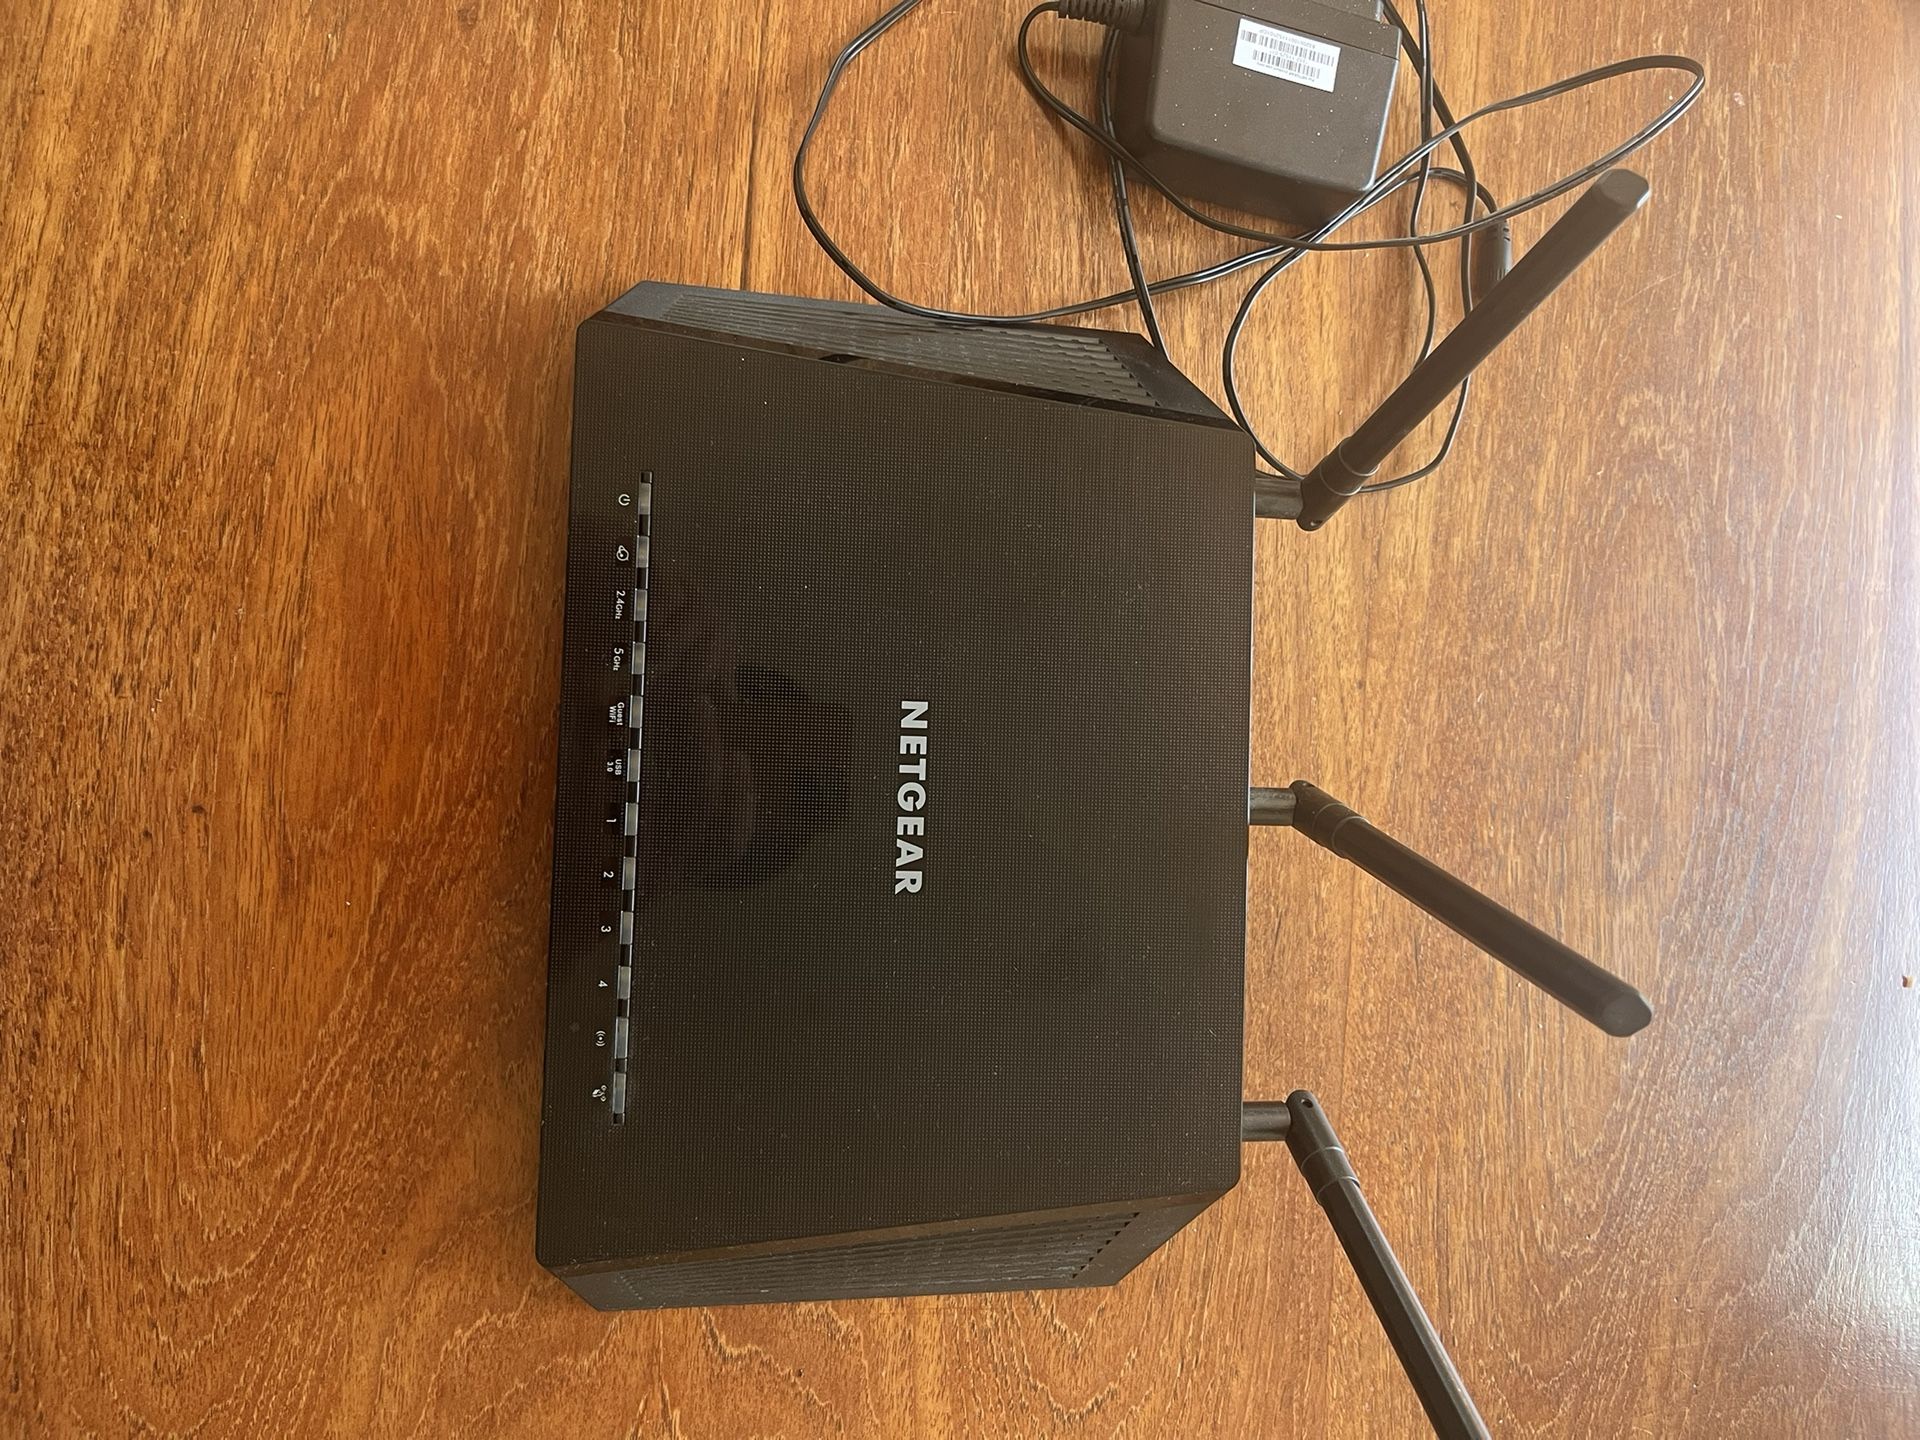 Netgear Nighthawk Wifi Router AC1750